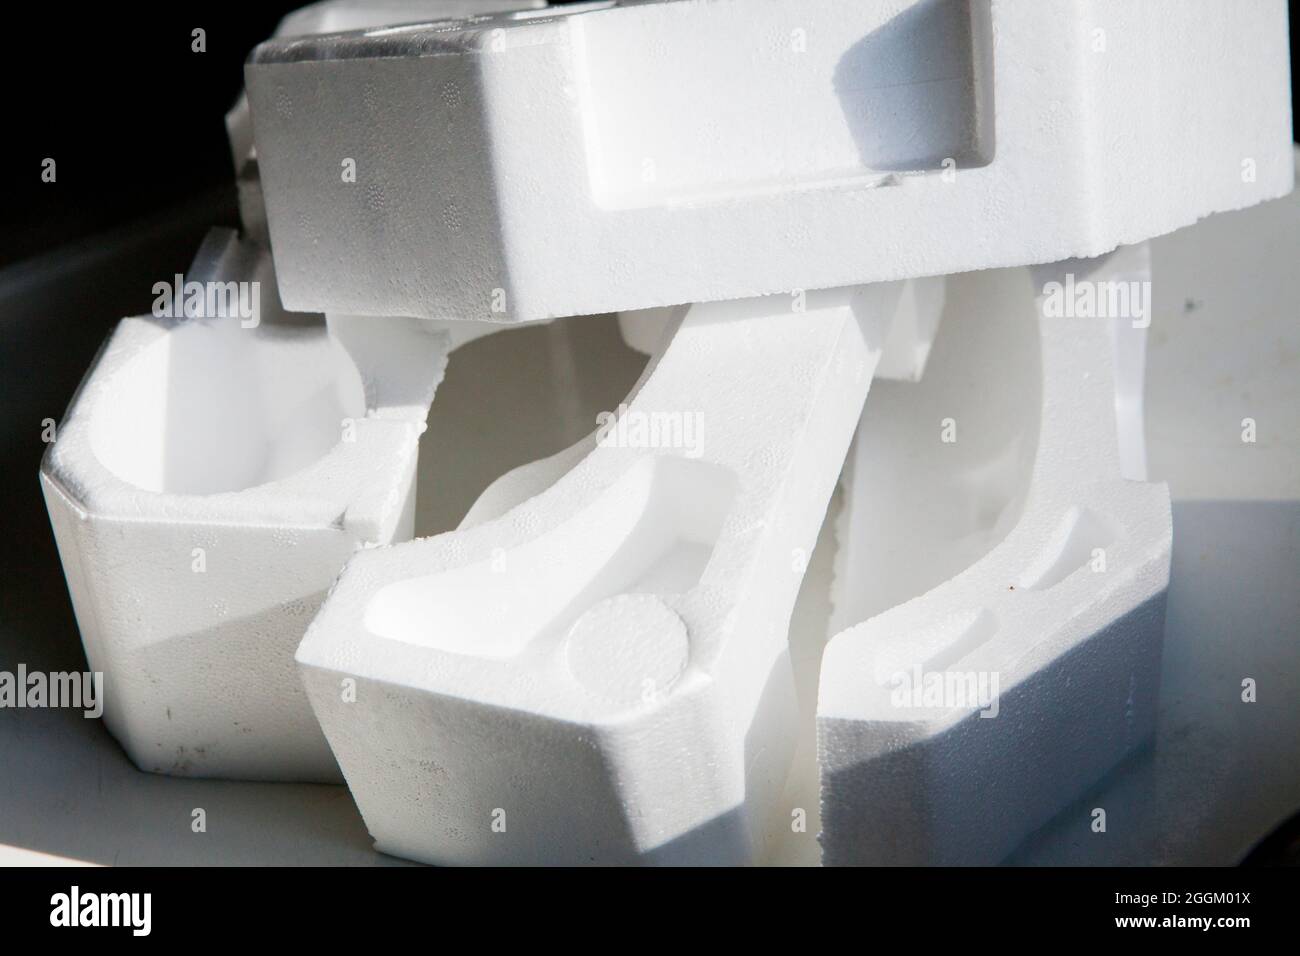 Dicarded styrofoam packaging (polystyrene foam packaging) - USA Stock Photo